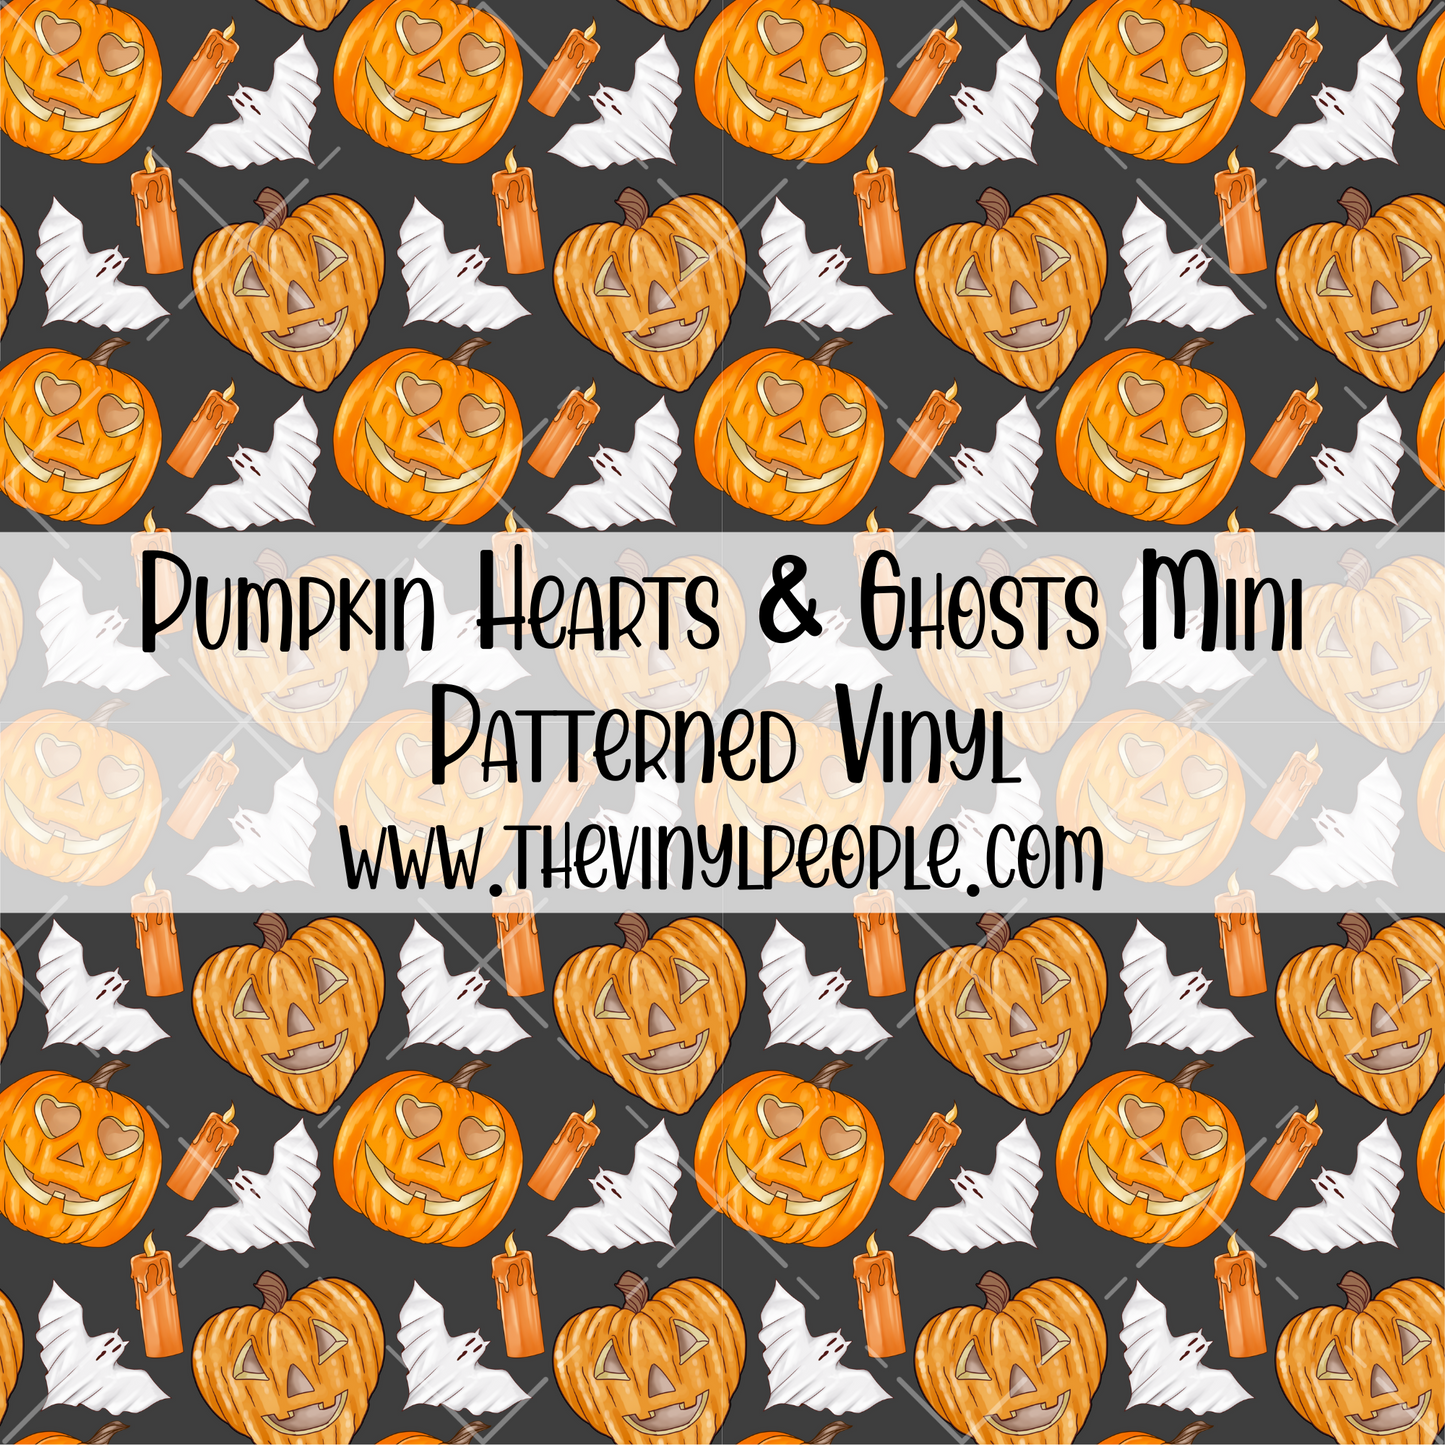 Pumpkin Hearts & Ghosts Patterned Vinyl